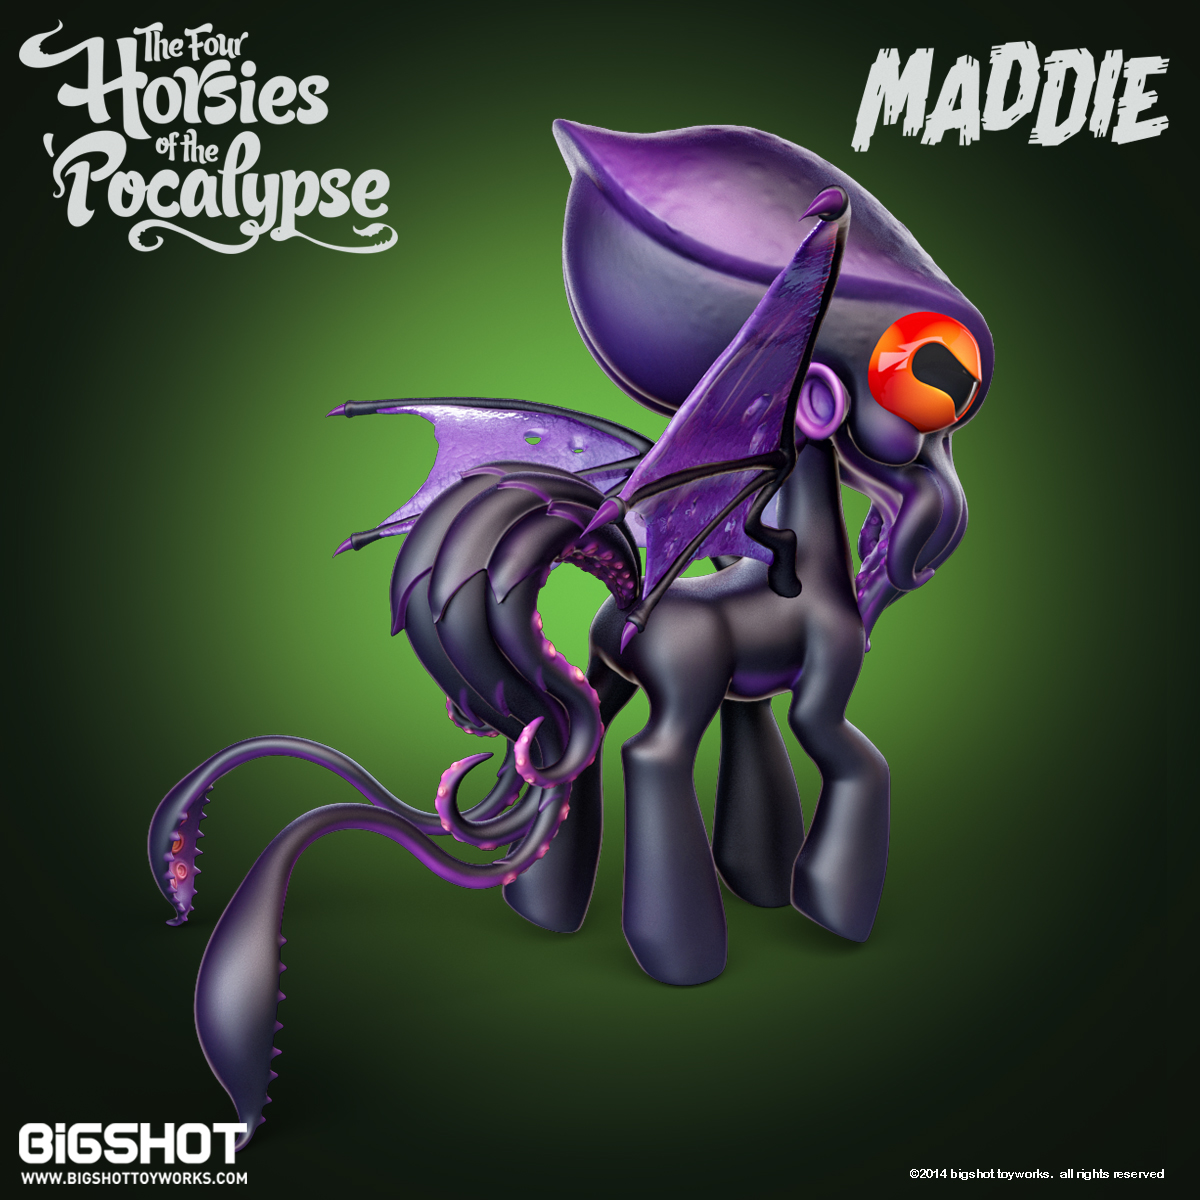 toy pony cthulu Character maddie Pocalypse Kickstarter 4horsies